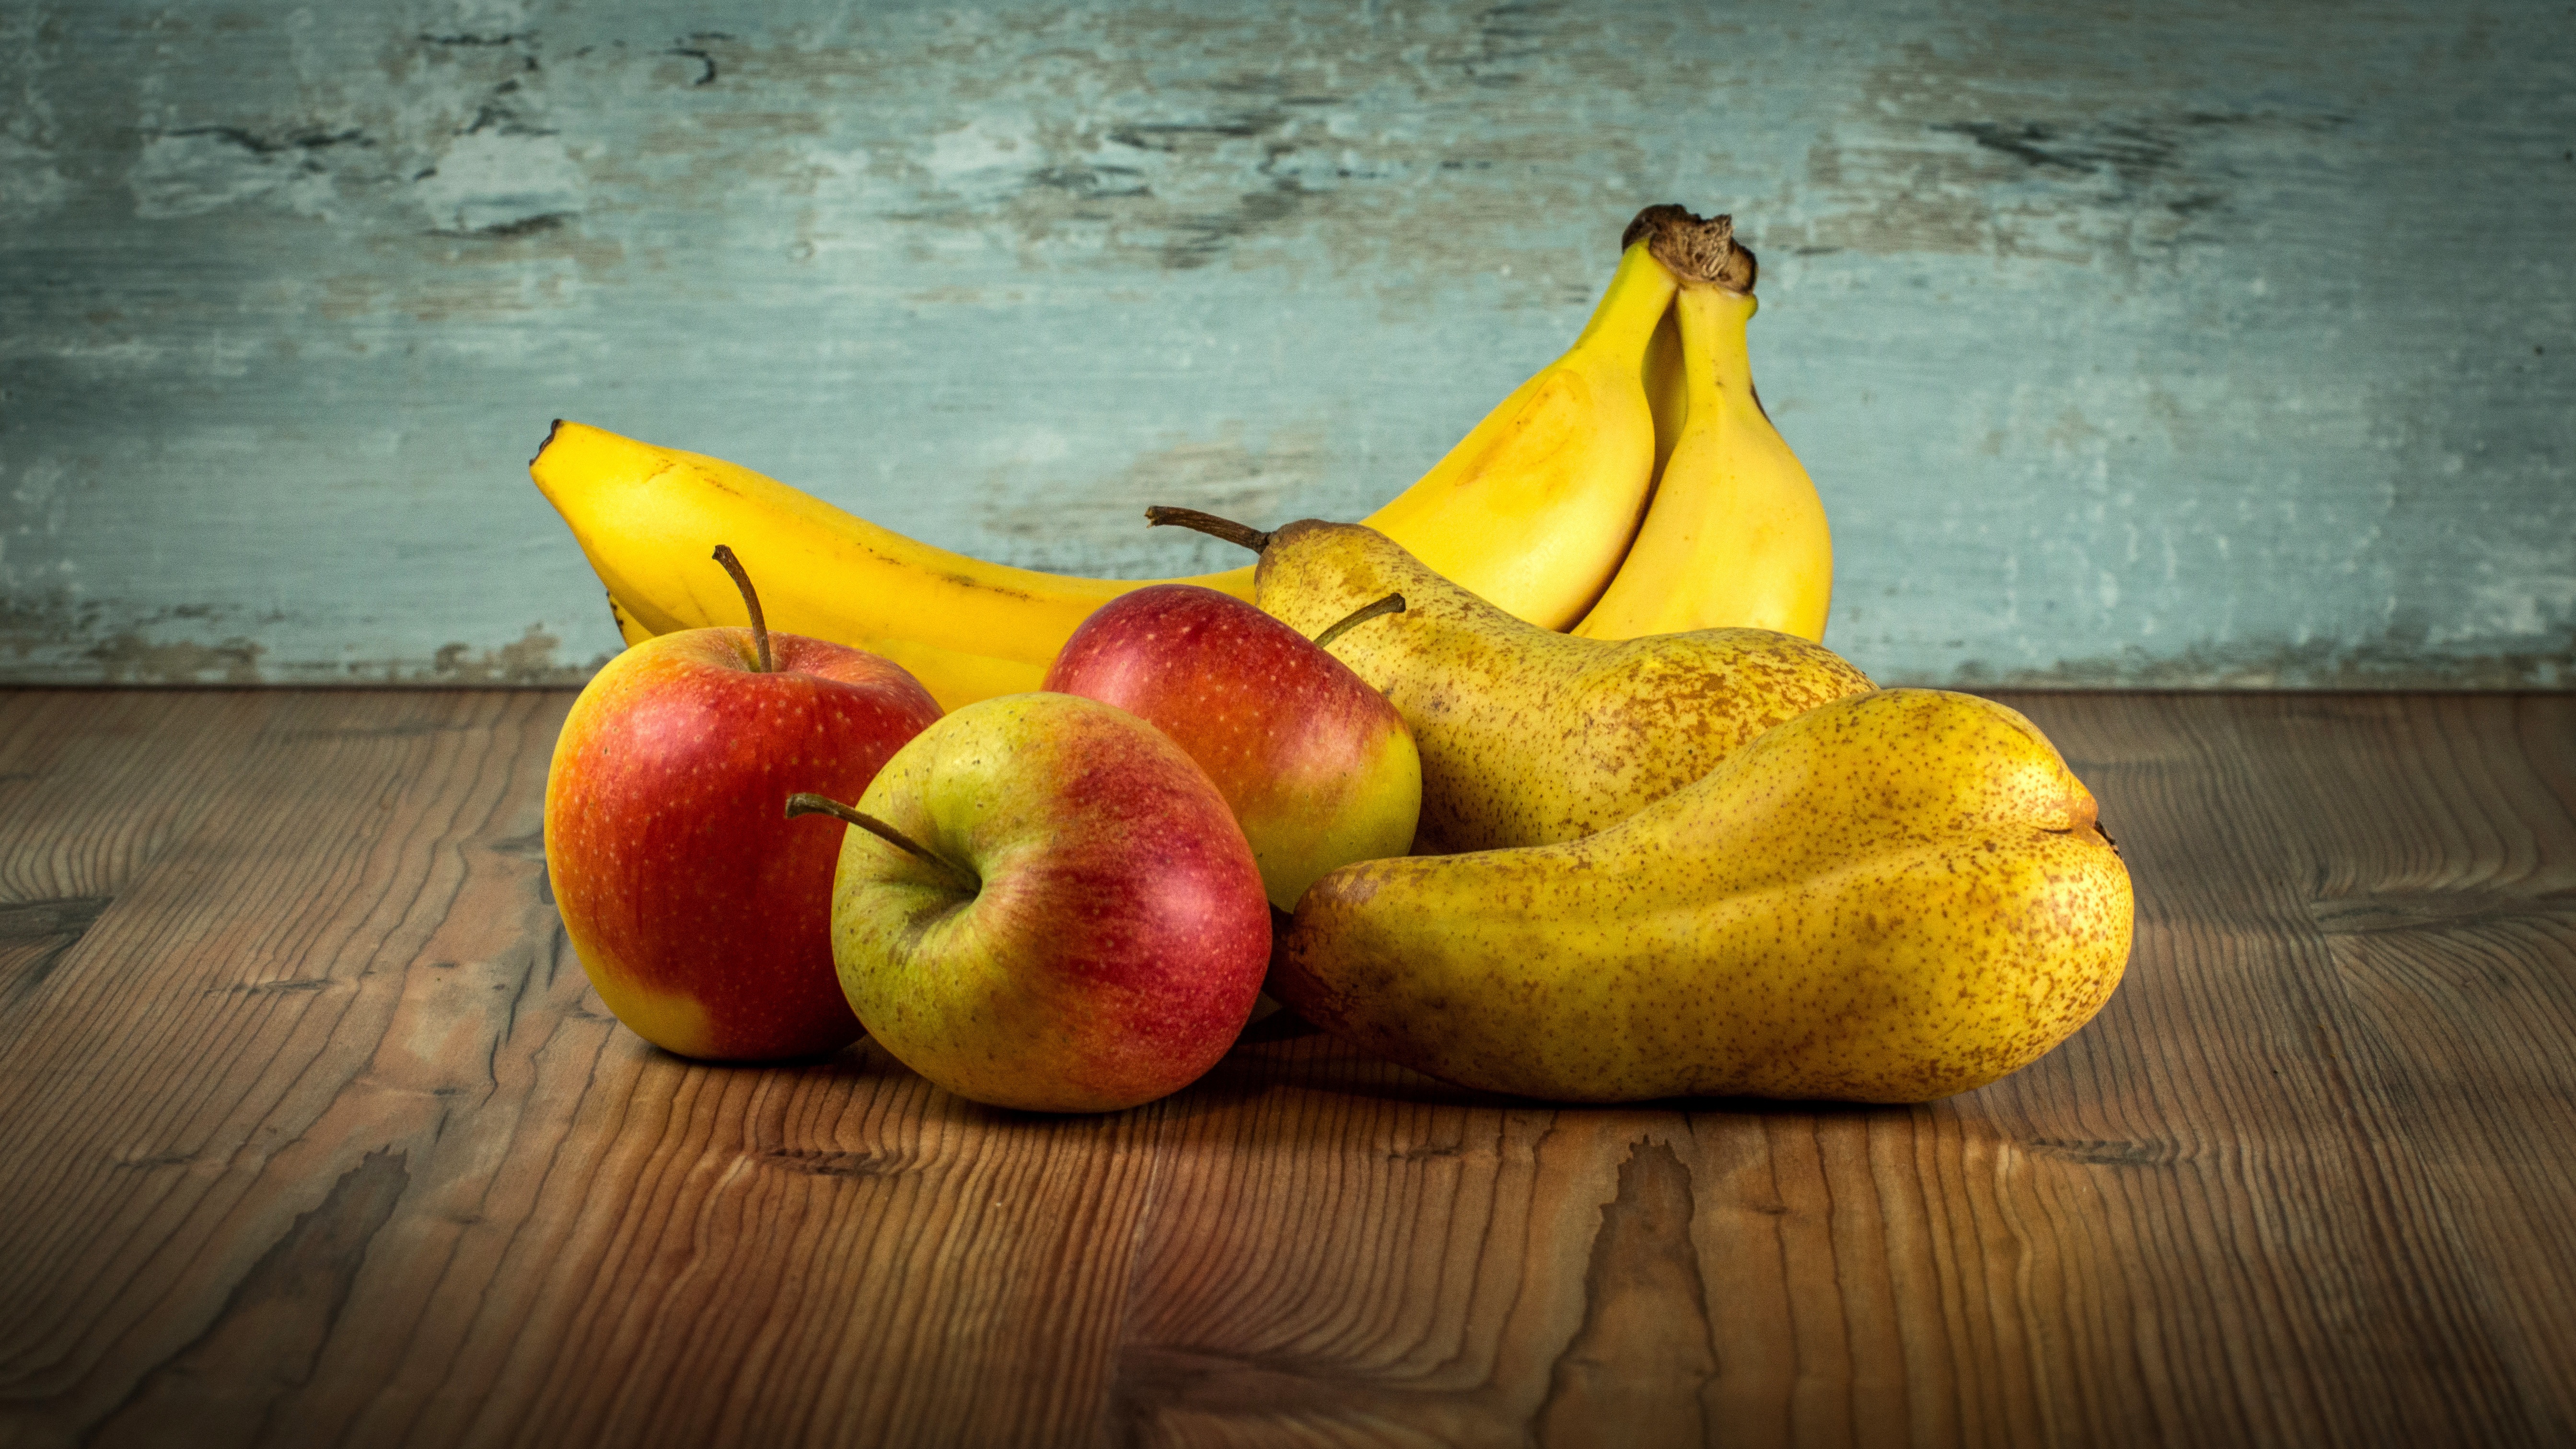 fruits, food, bananas, apples, pears